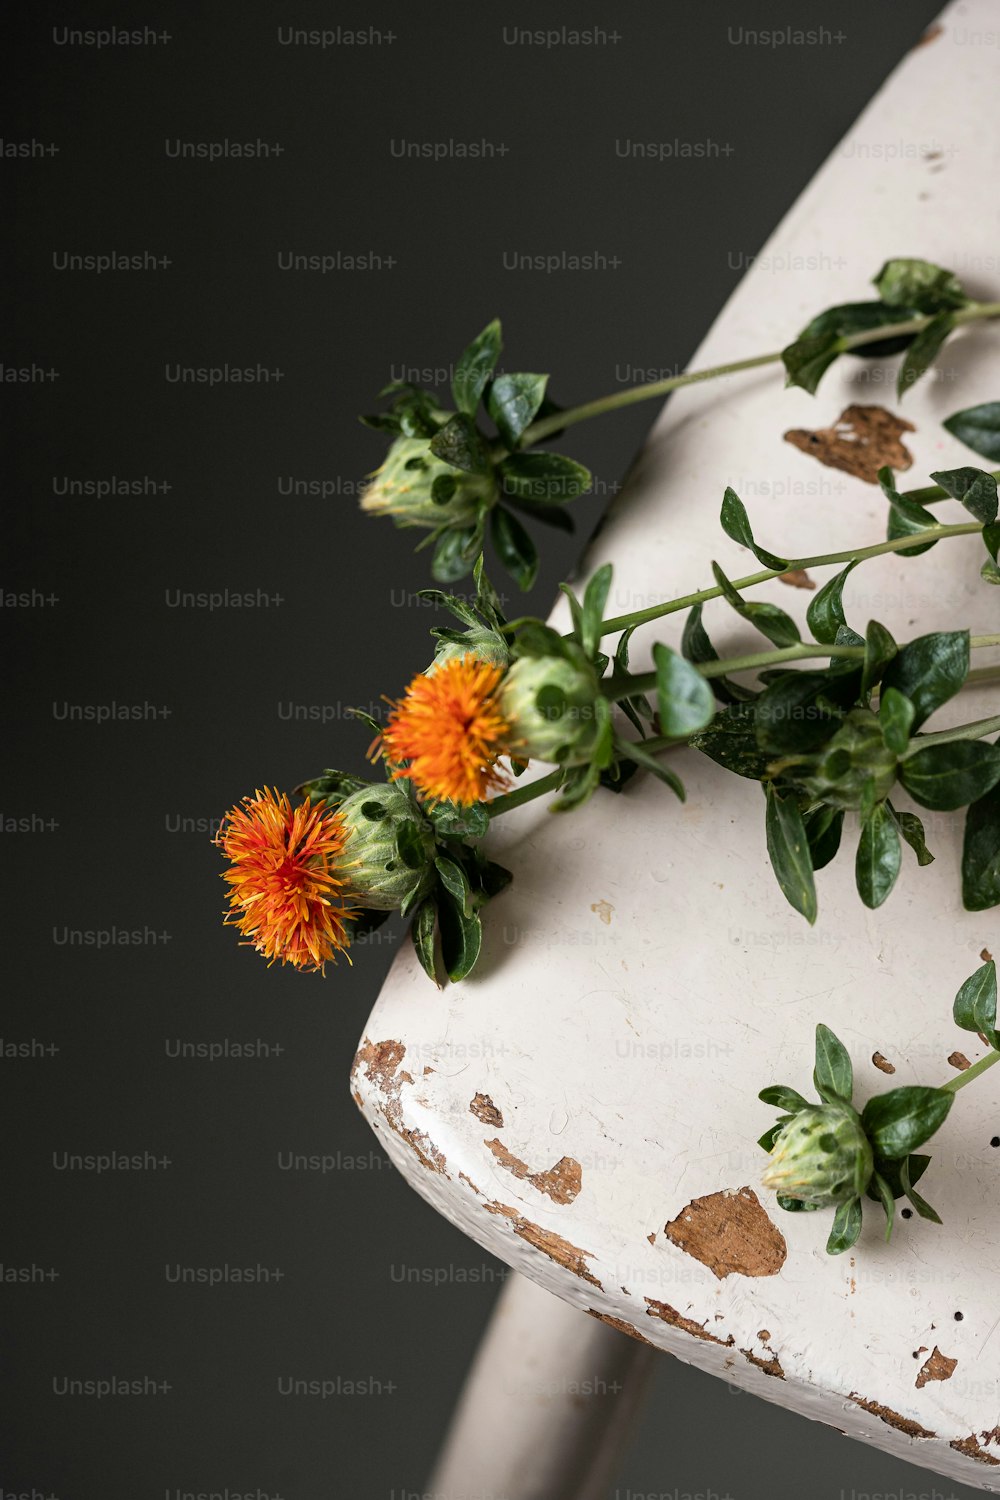 Flower Decor Pictures  Download Free Images on Unsplash